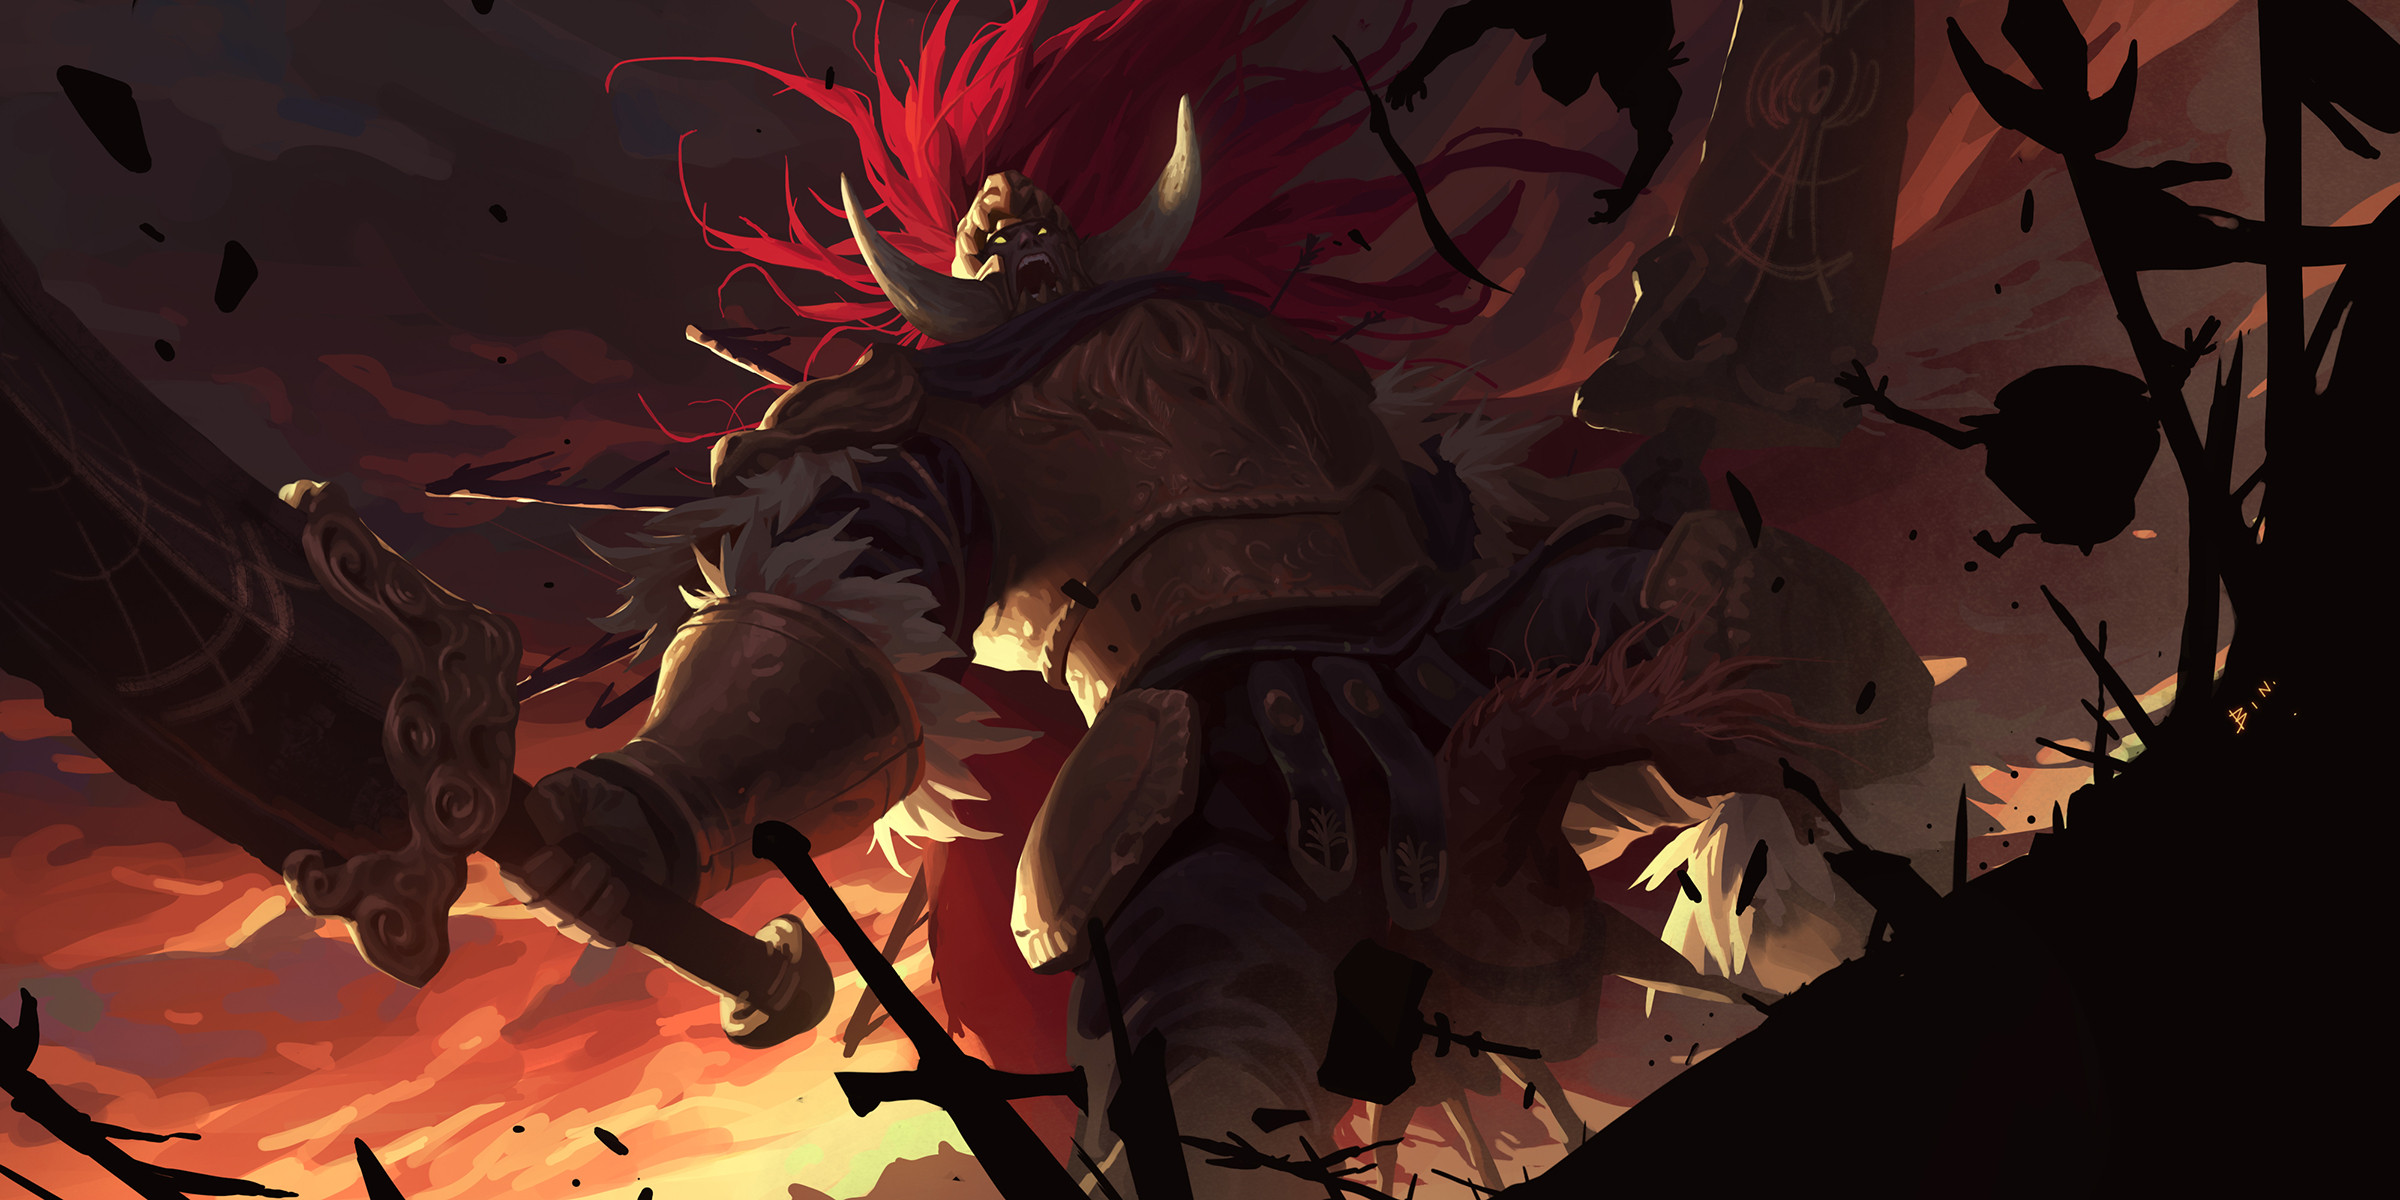 Elden ring Samurai wallpaper by Leoneying - Download on ZEDGE™